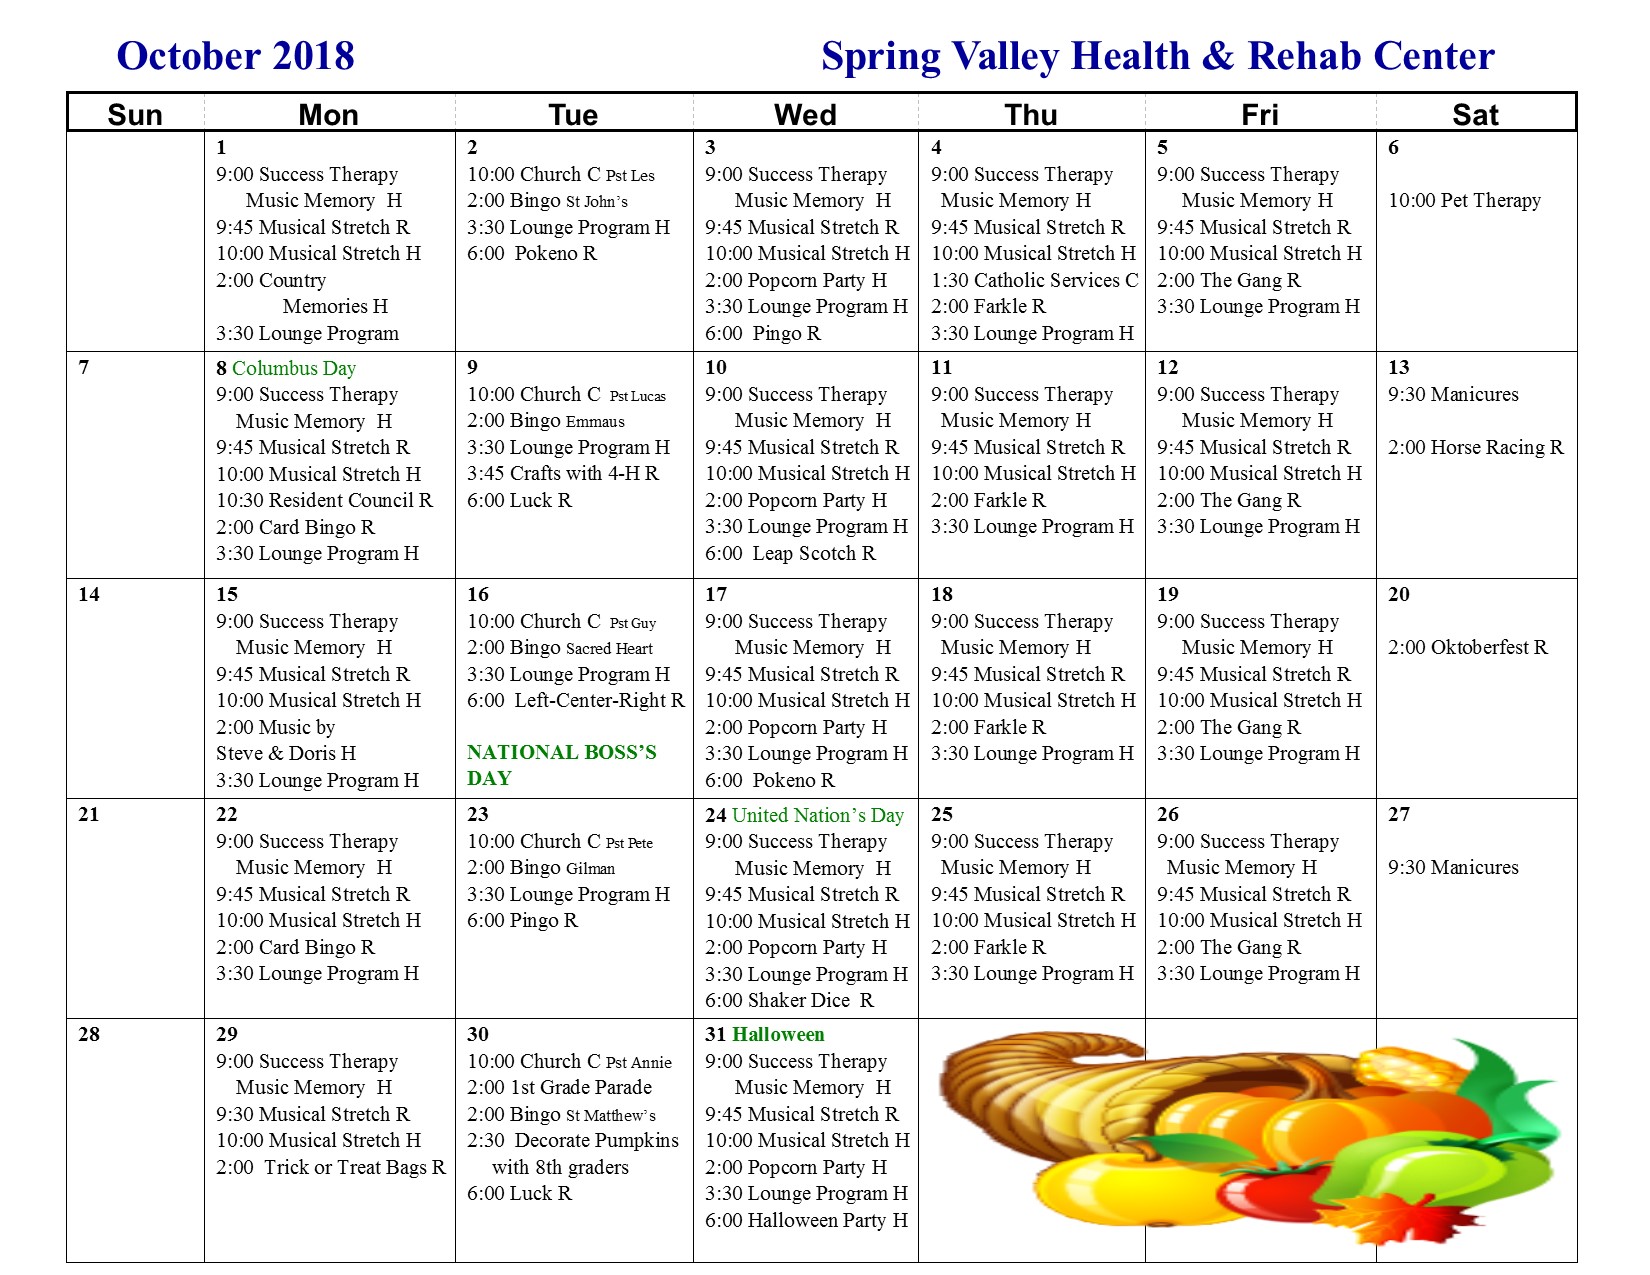 October Activity Calendar Spring Valley Senior Living and Health Care